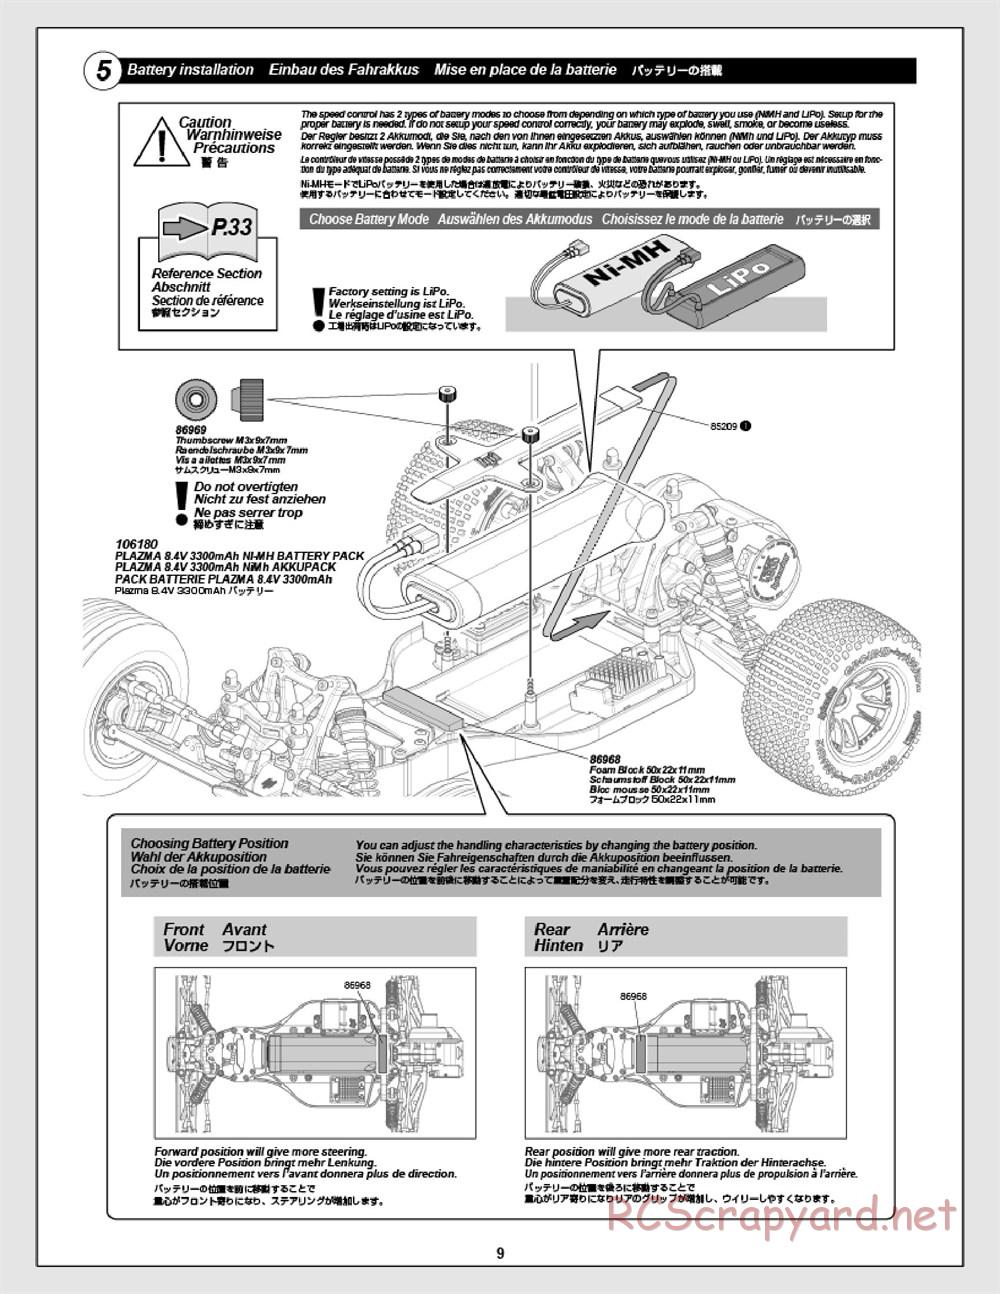 HPI - E-Firestorm 10T Flux - Manual - Page 9